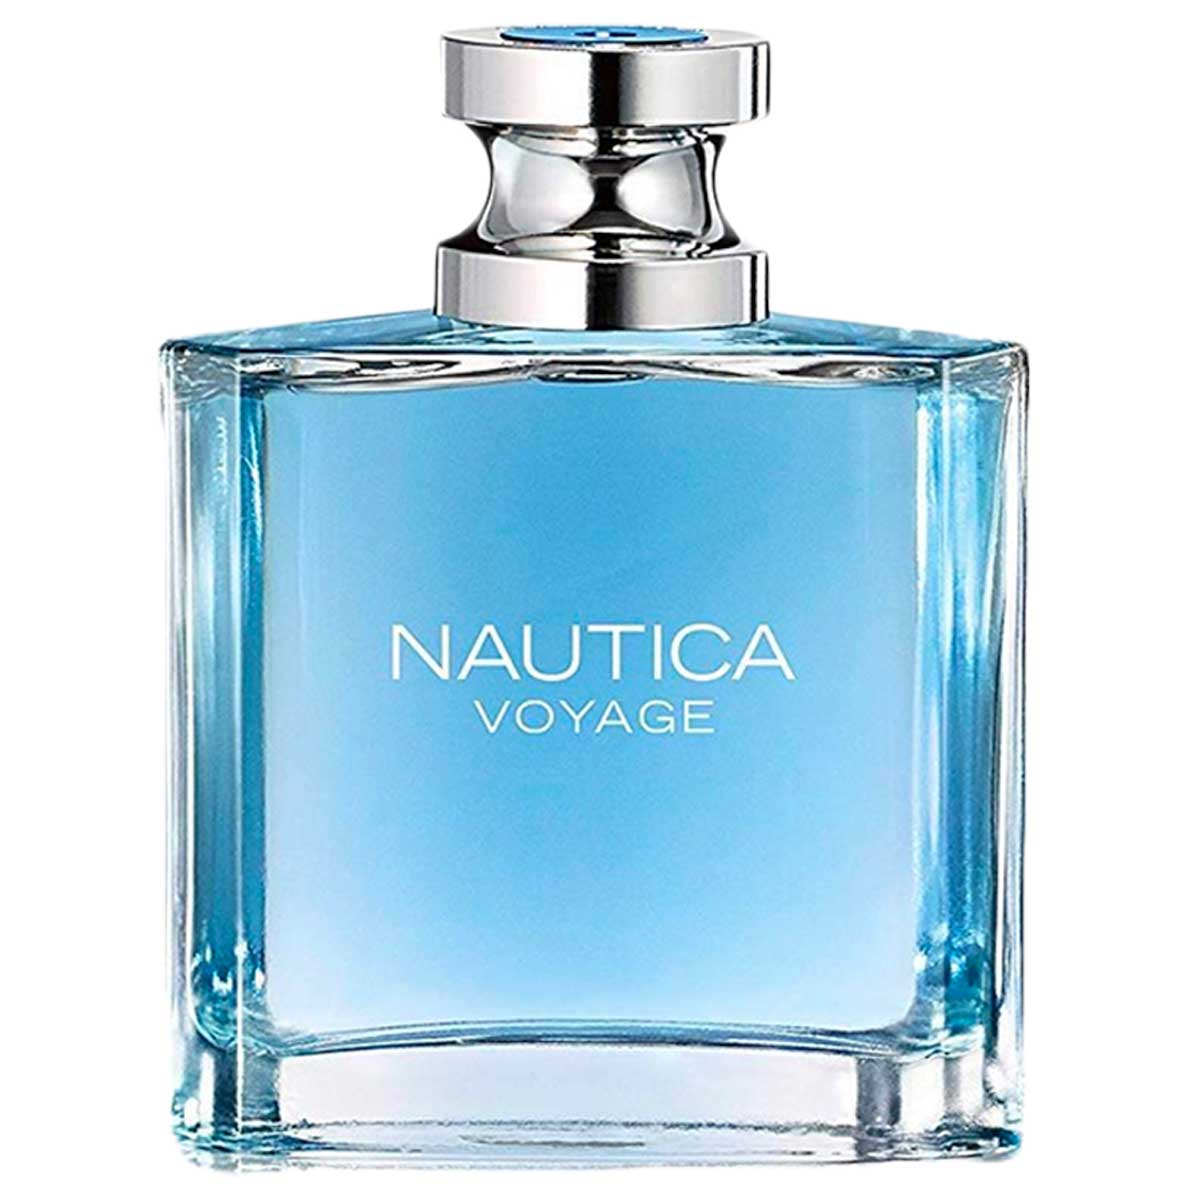 nautica voyage